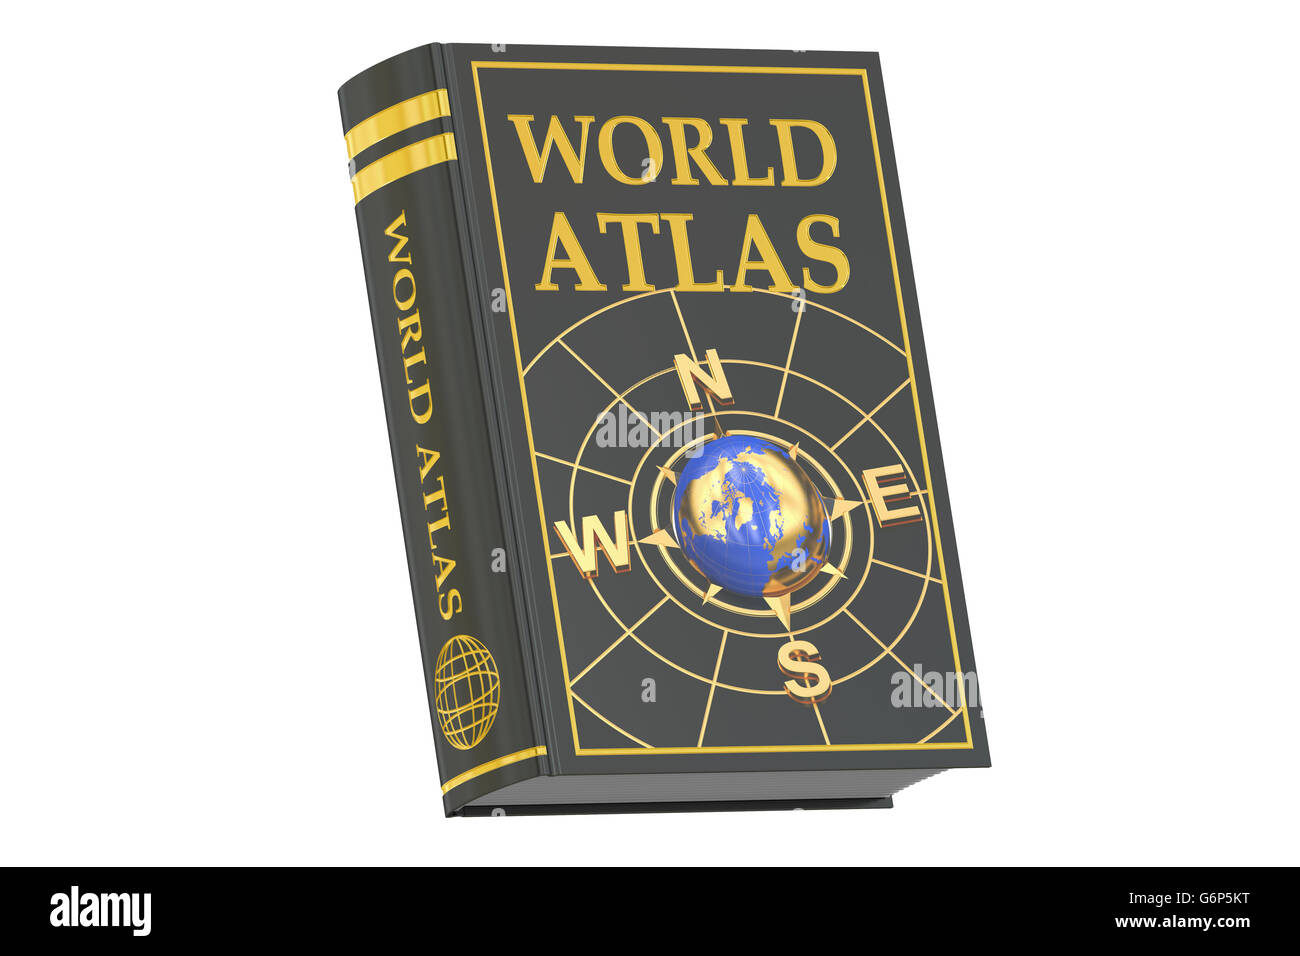 world atlas book middle school c